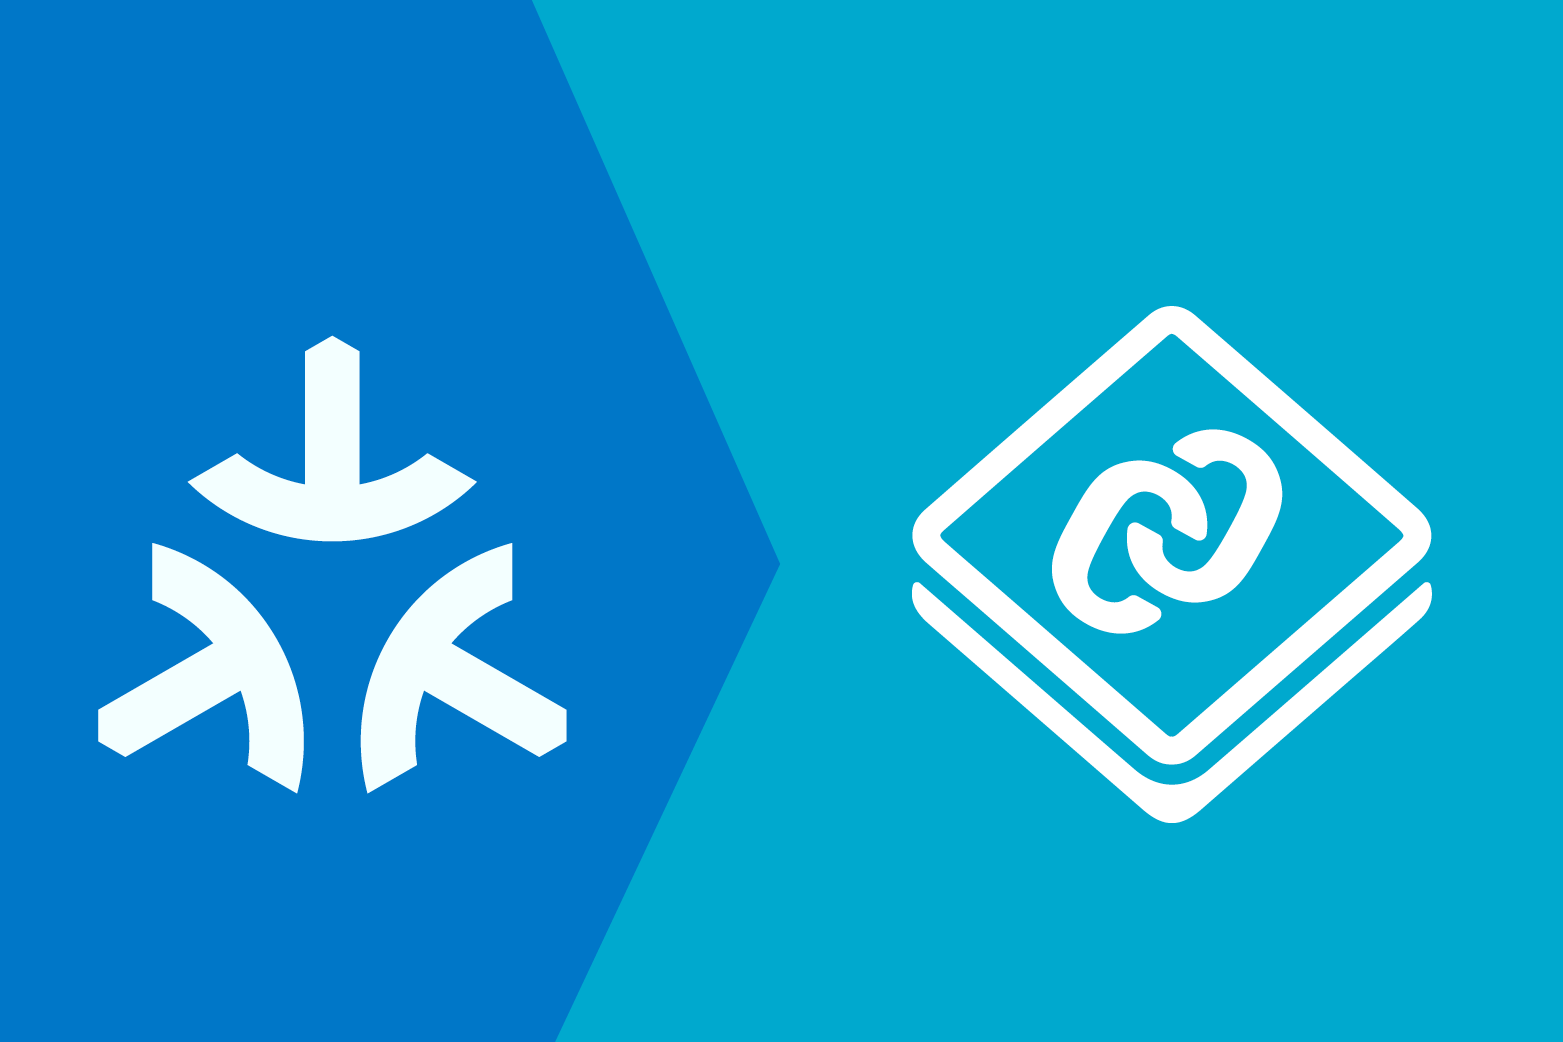 Matter symbol and nRF Connect SDK symbol